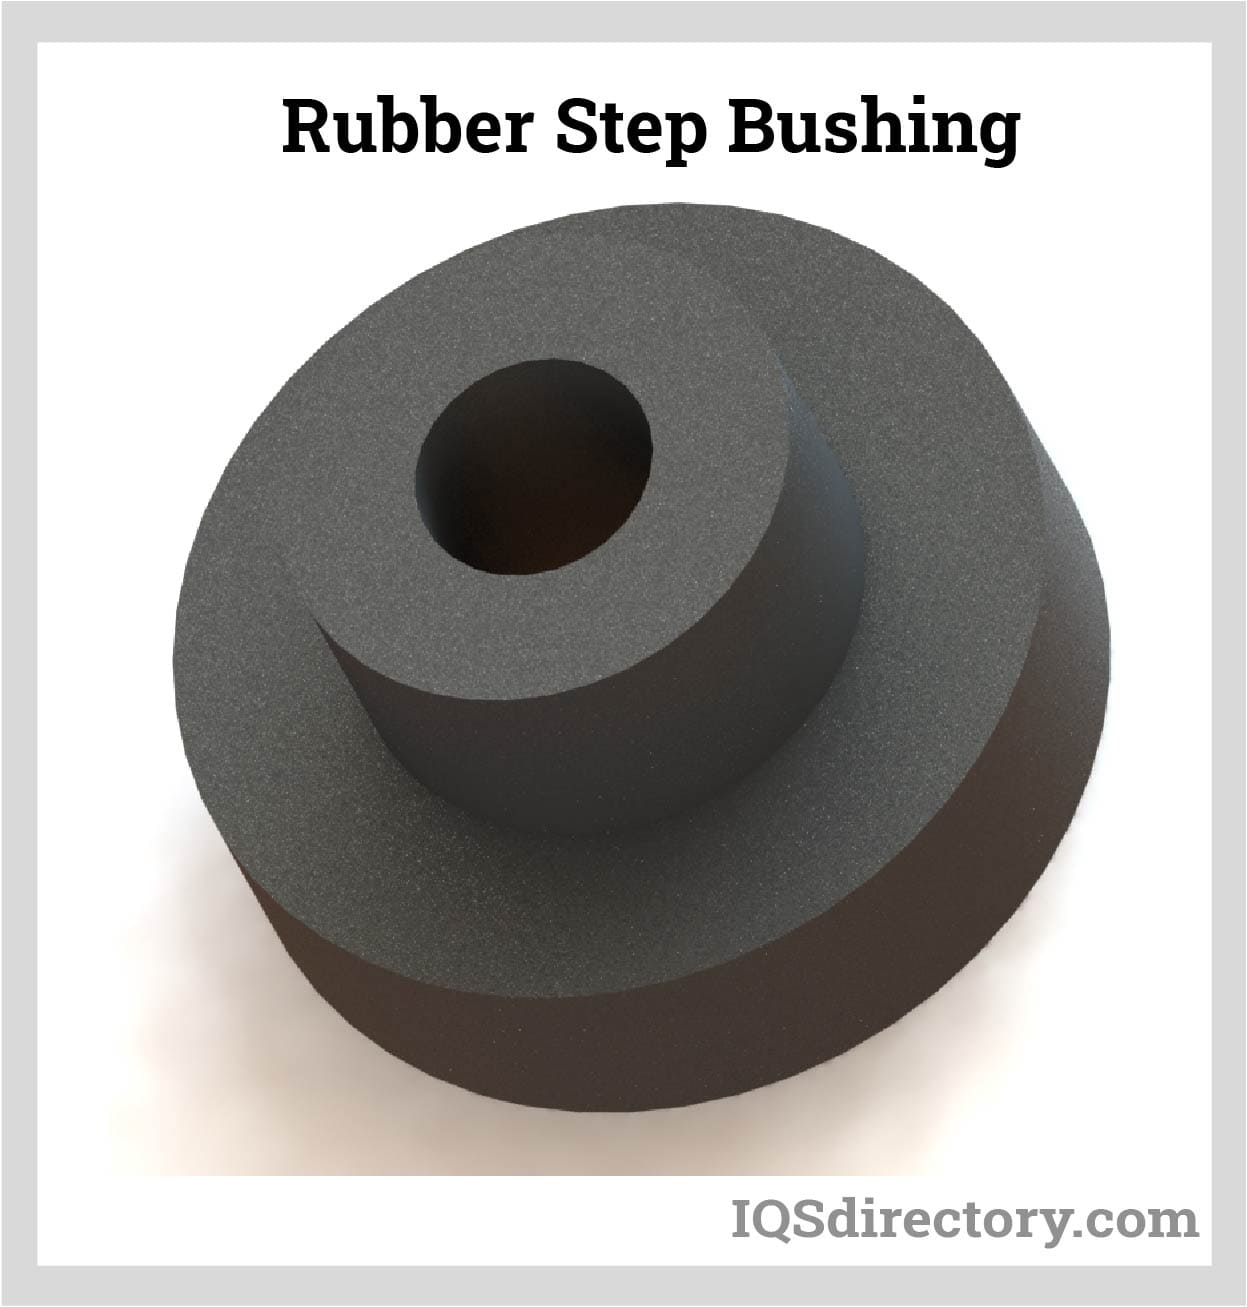 Rubber Step Bushing